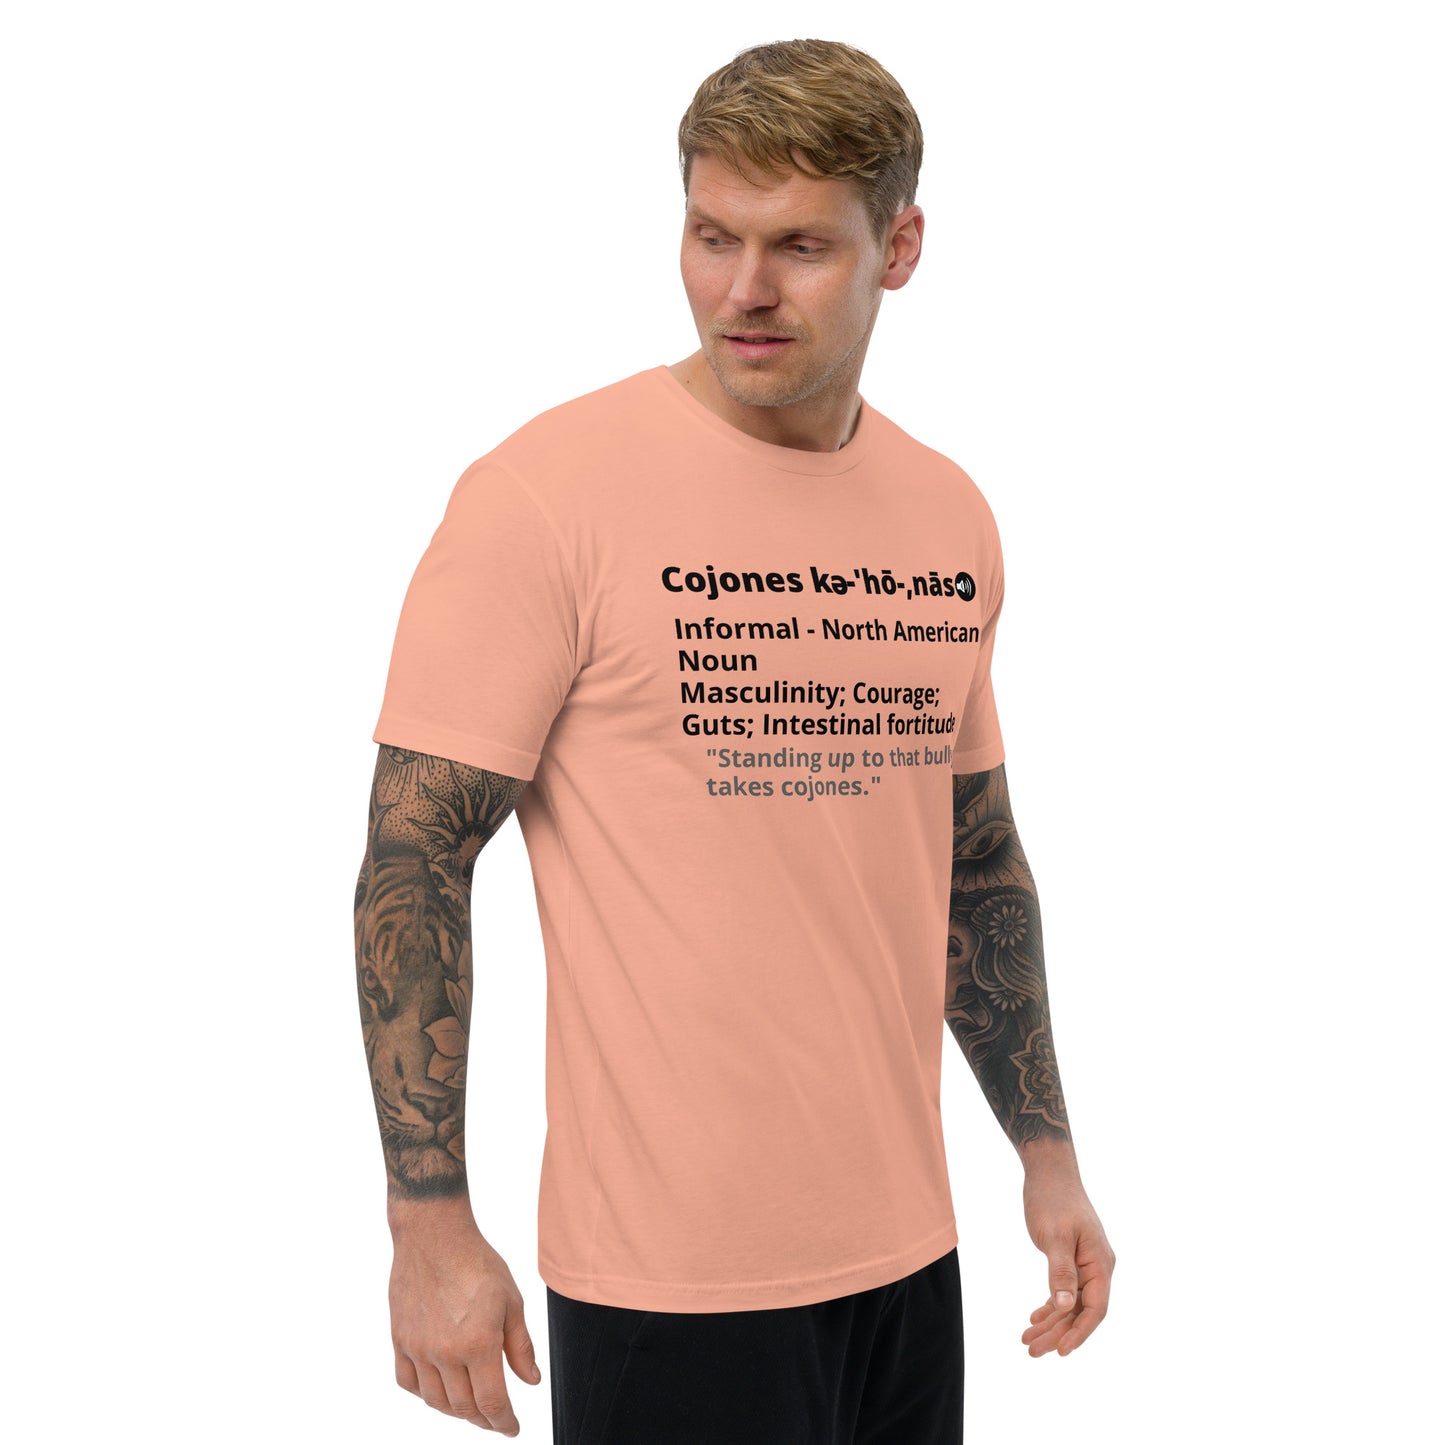 Cojones Definition Short Sleeve T-shirt